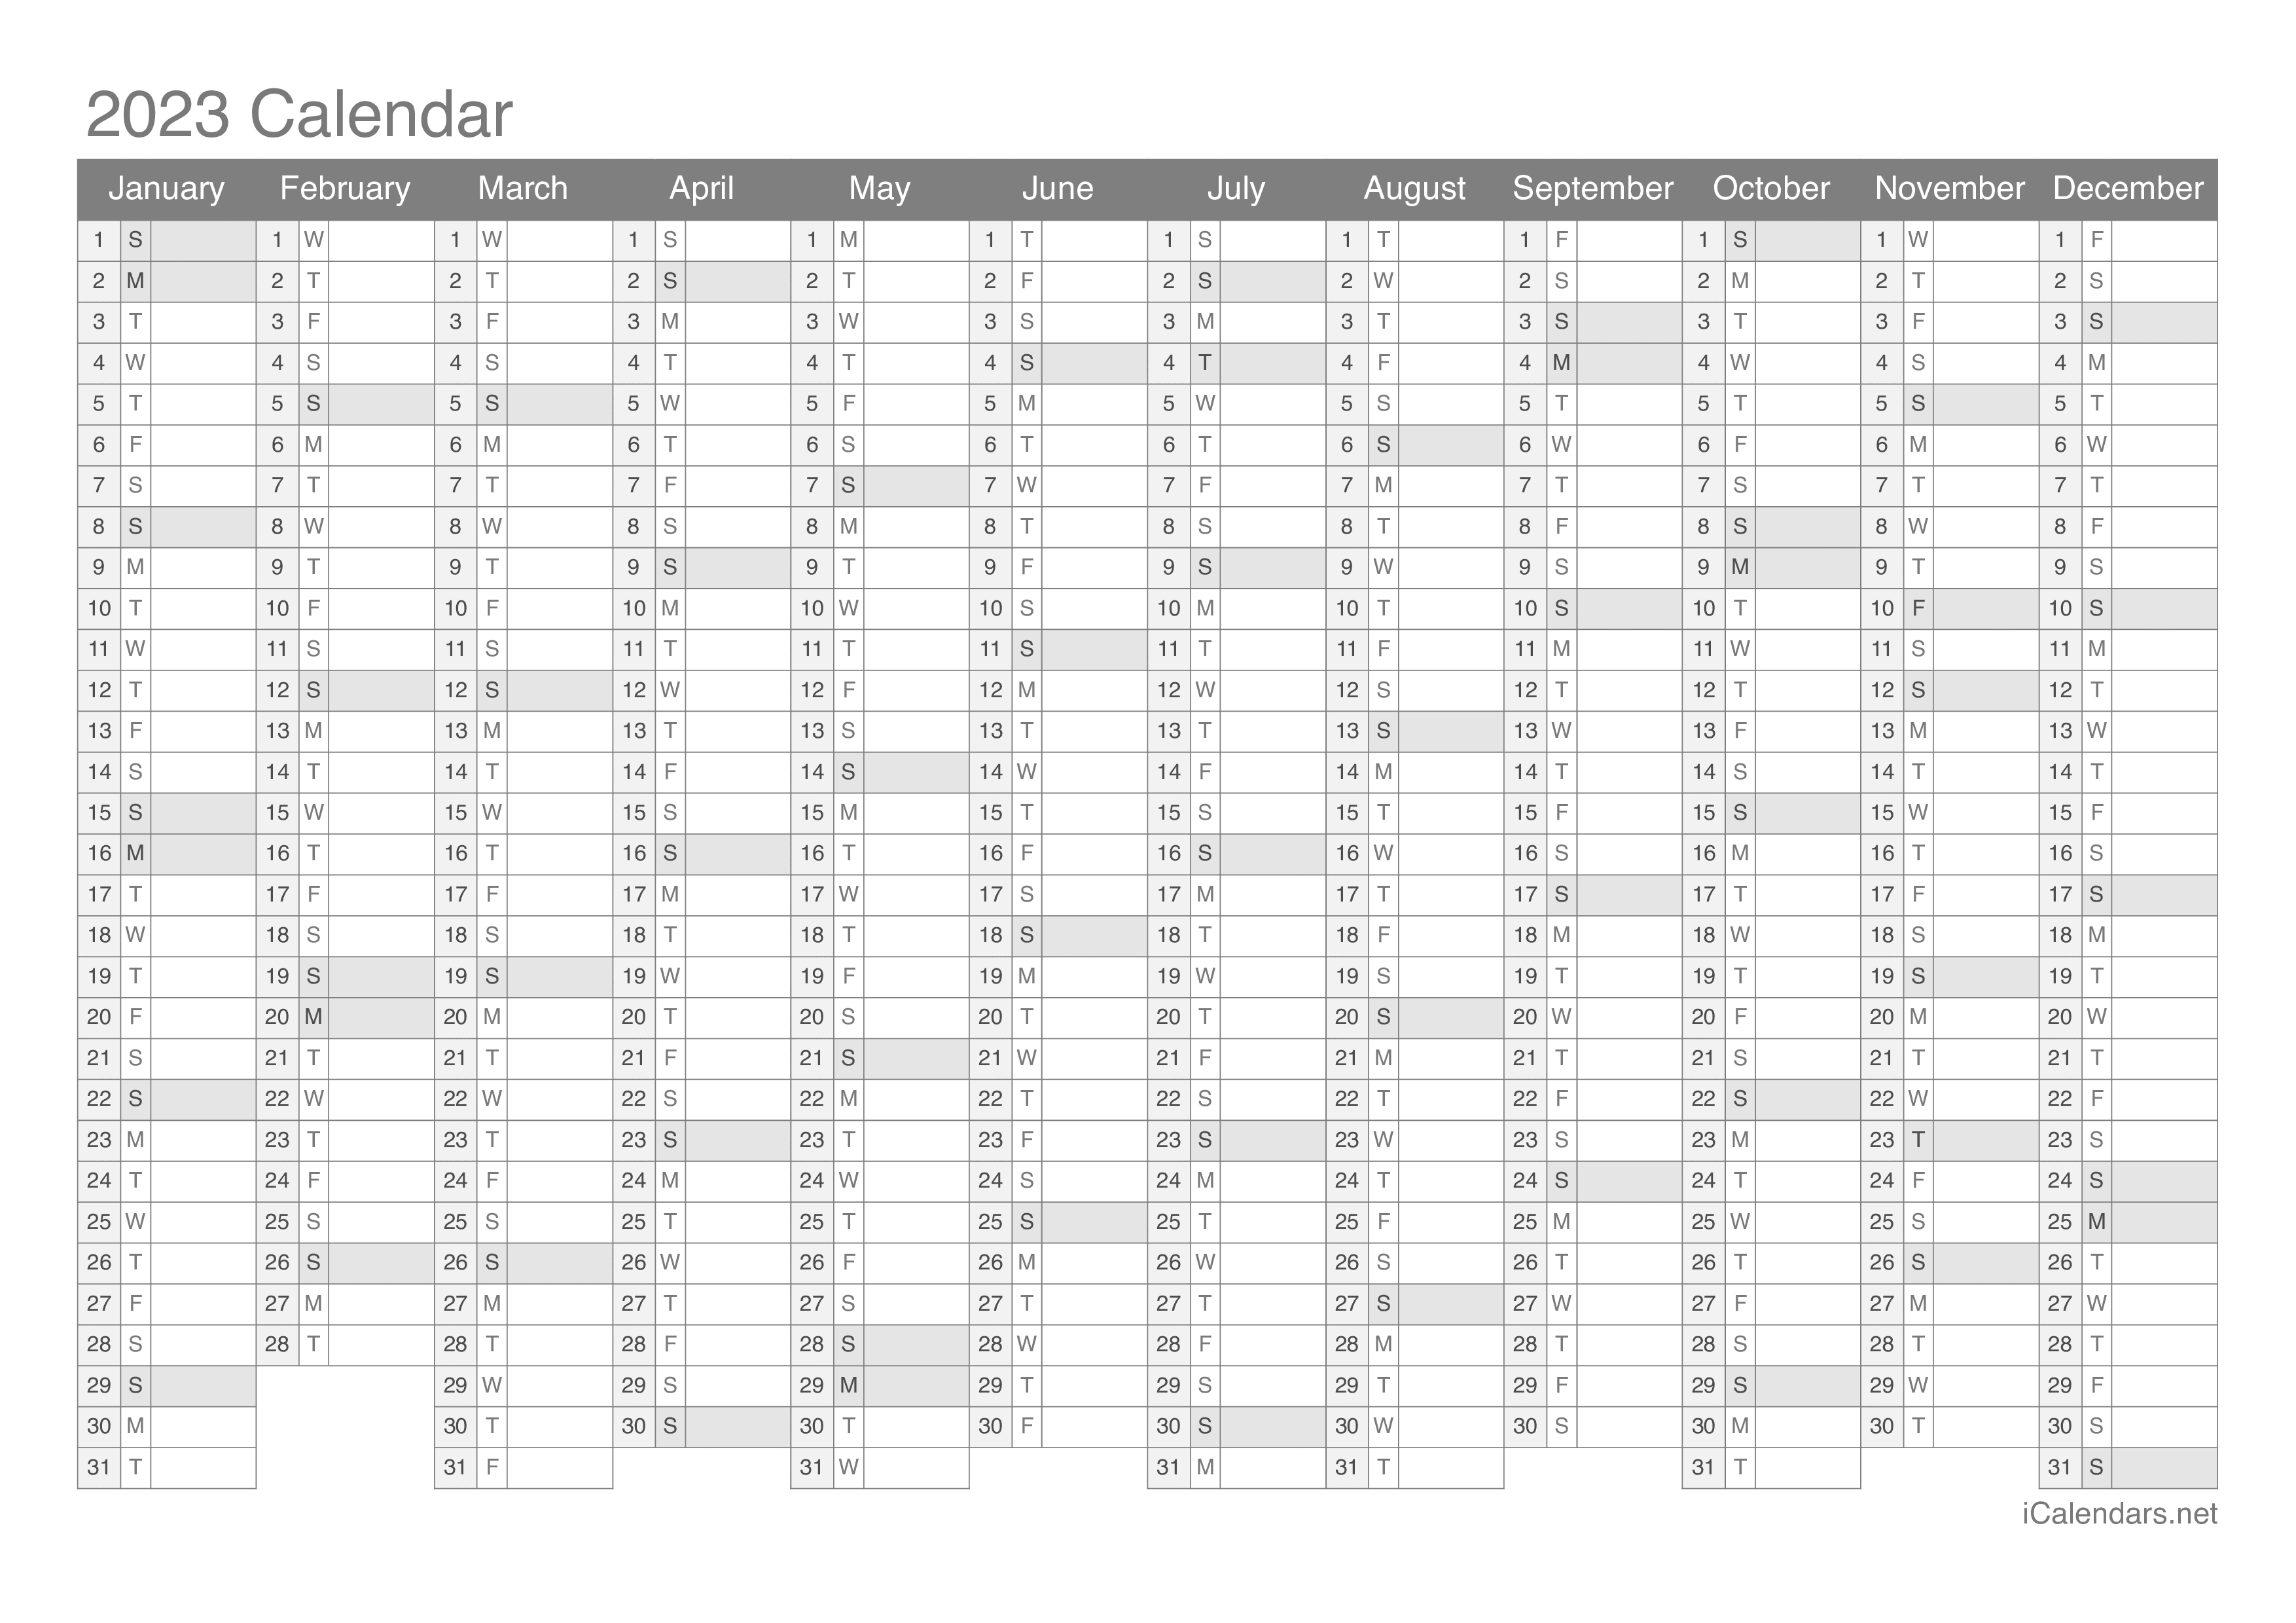 2023 printable calendar pdf or excel icalendars net